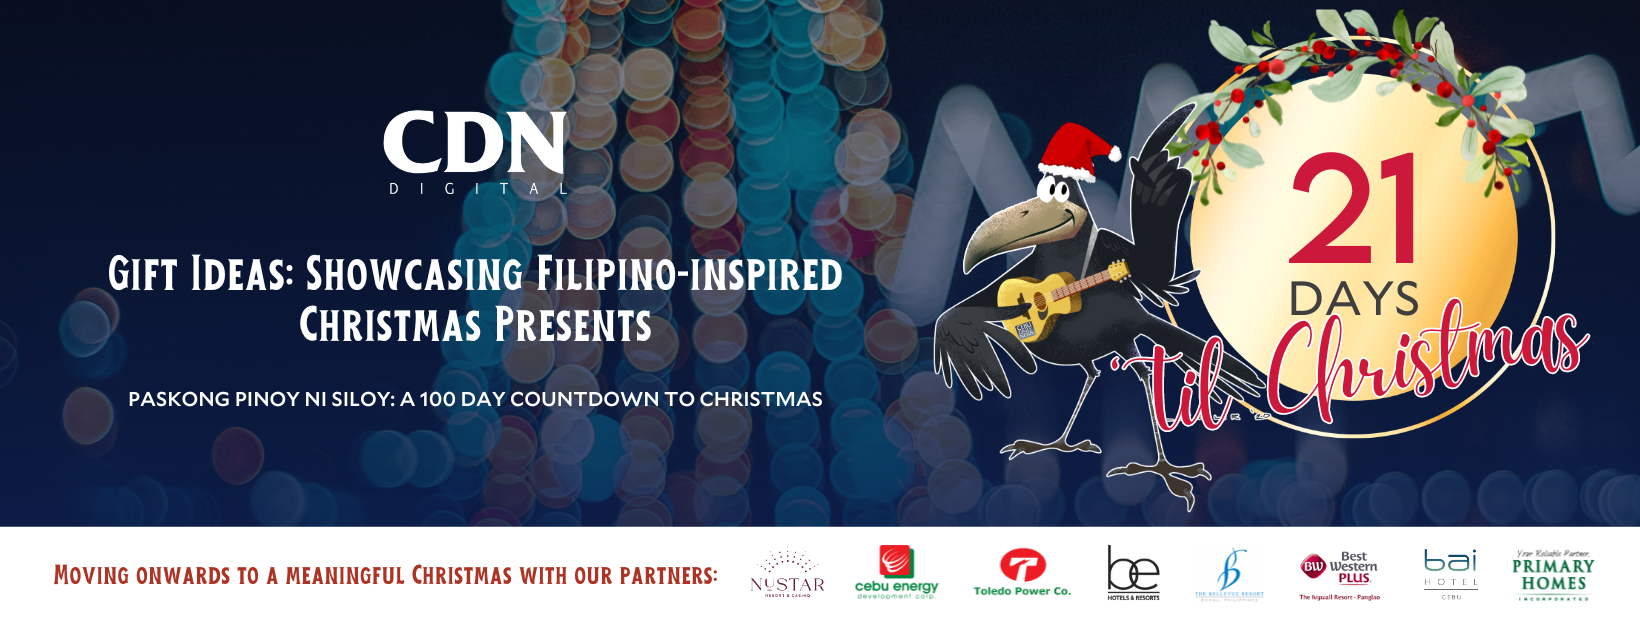 Gift Ideas: Showcasing Filipino-inspired Christmas Presents